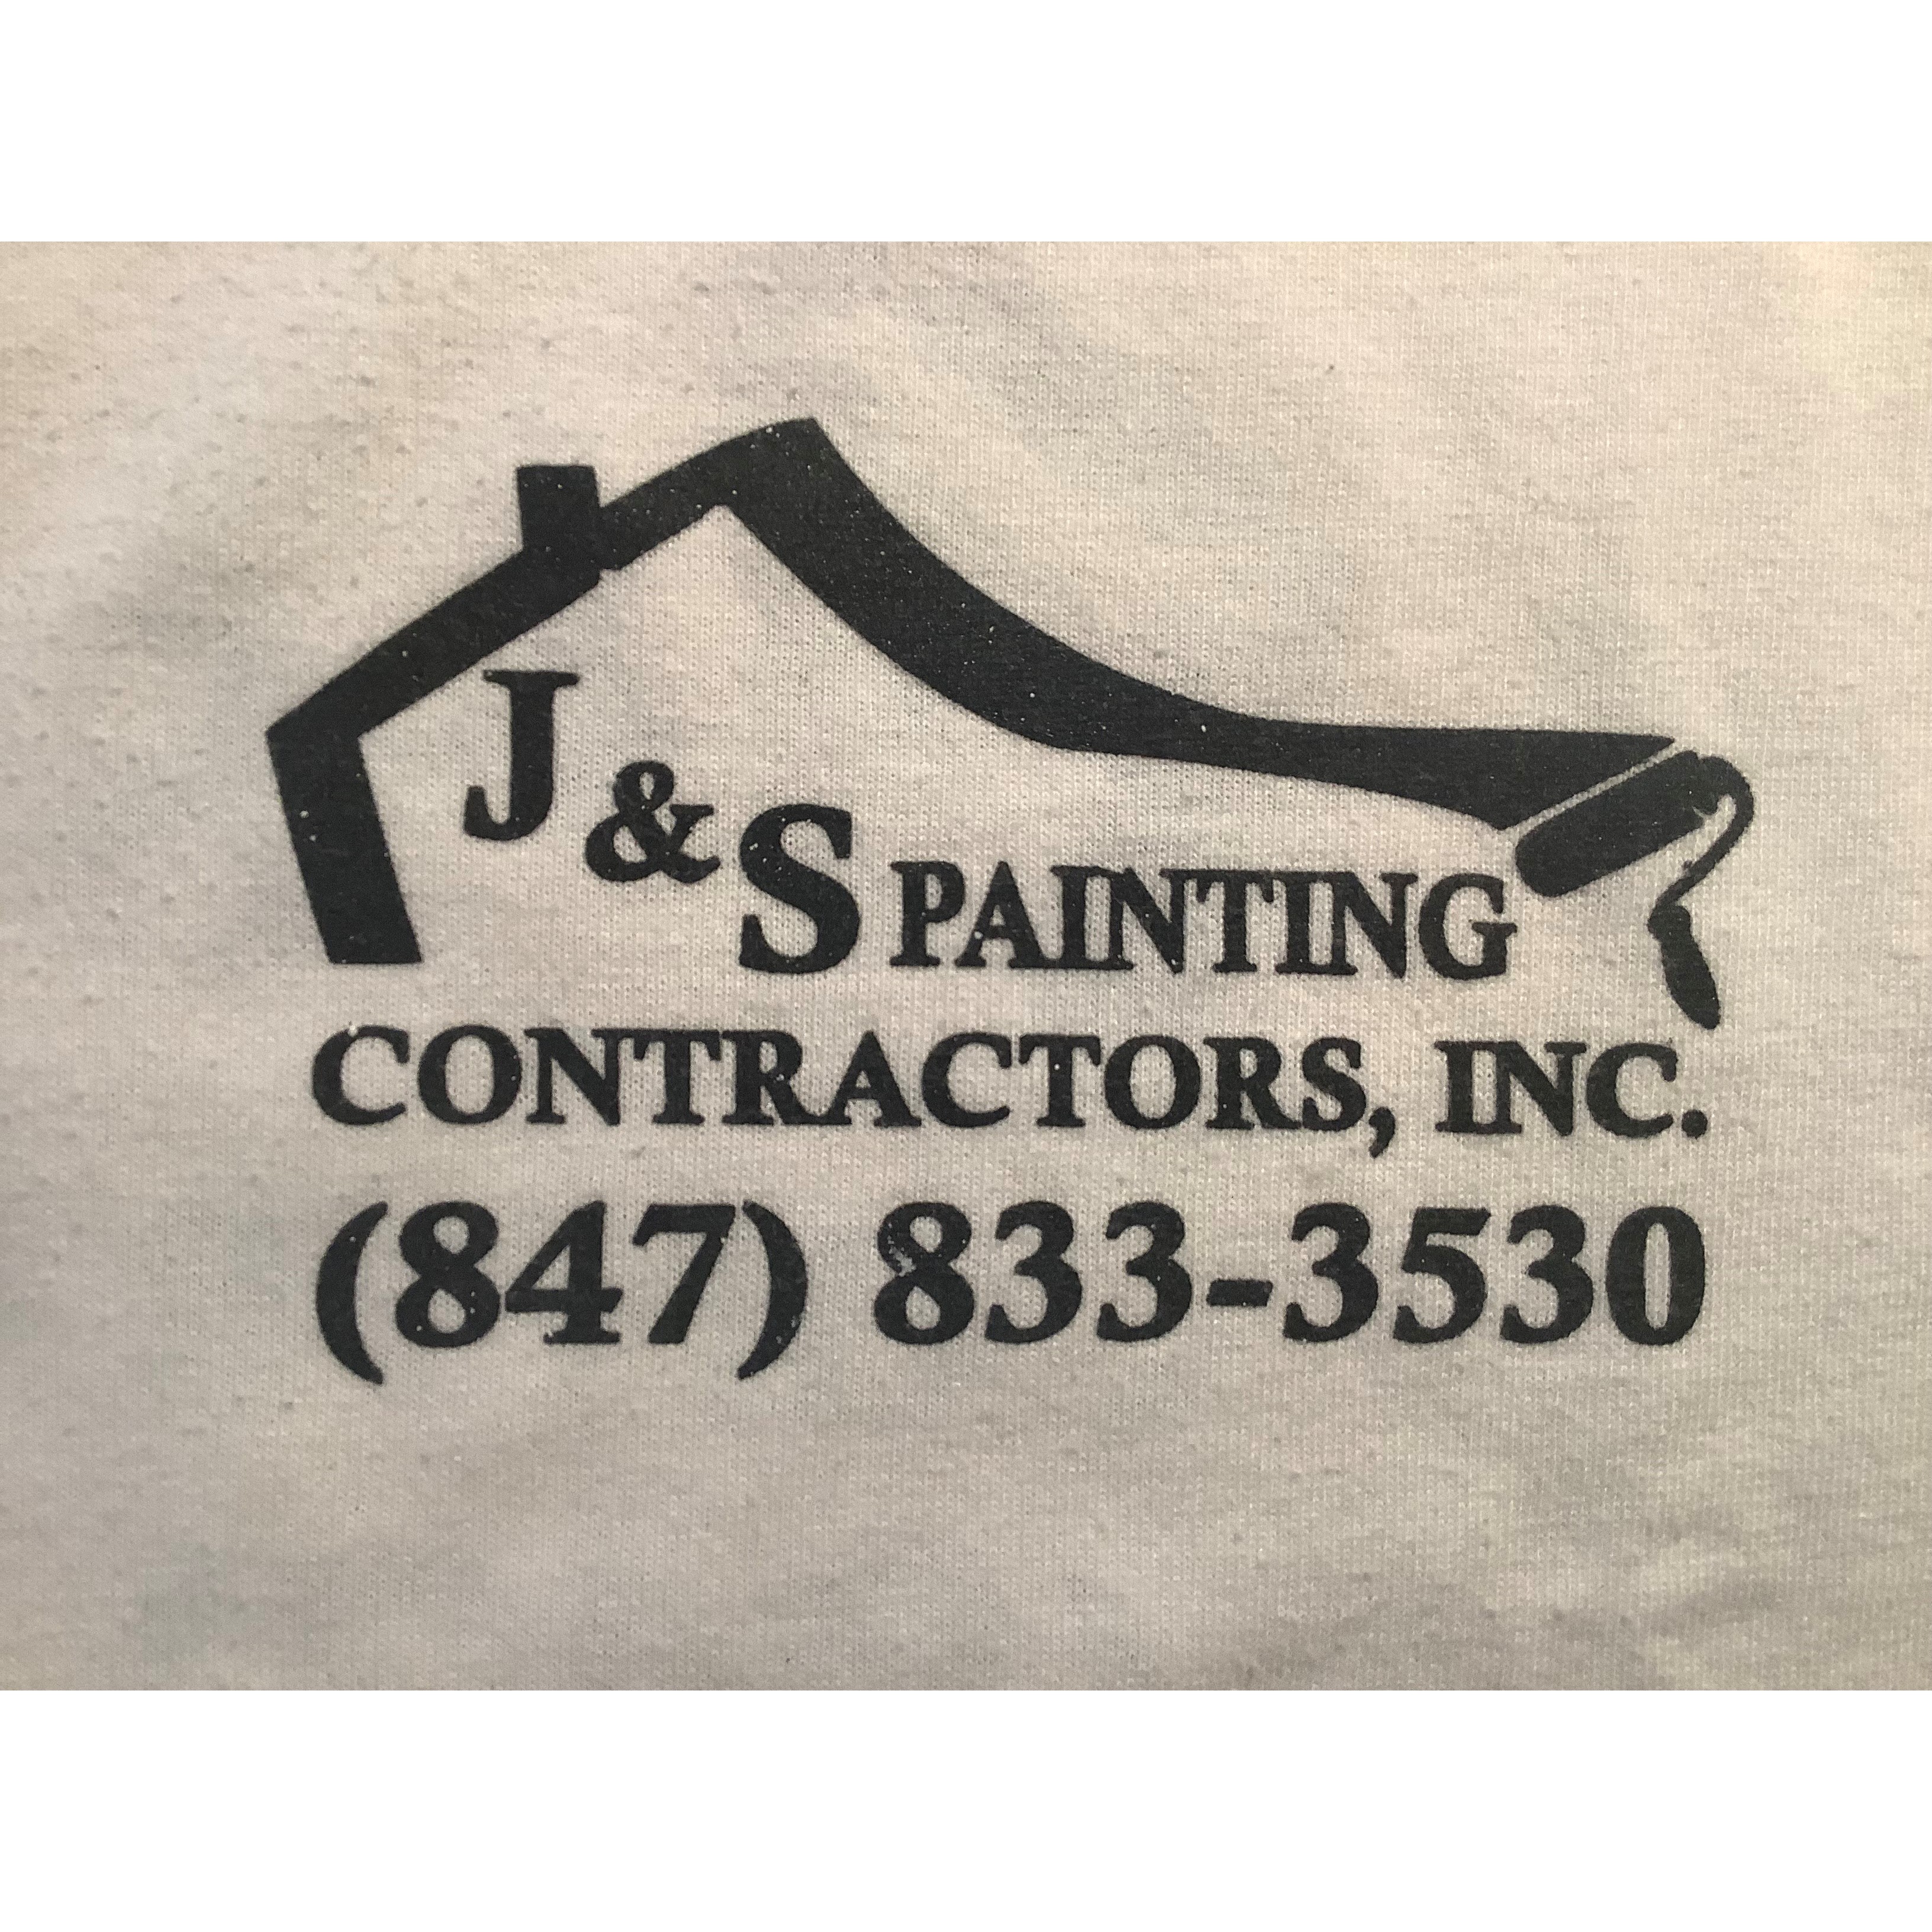 J & S Painting Contractors, Inc. - Schaumburg, IL 60194 - (847)833-3530 | ShowMeLocal.com